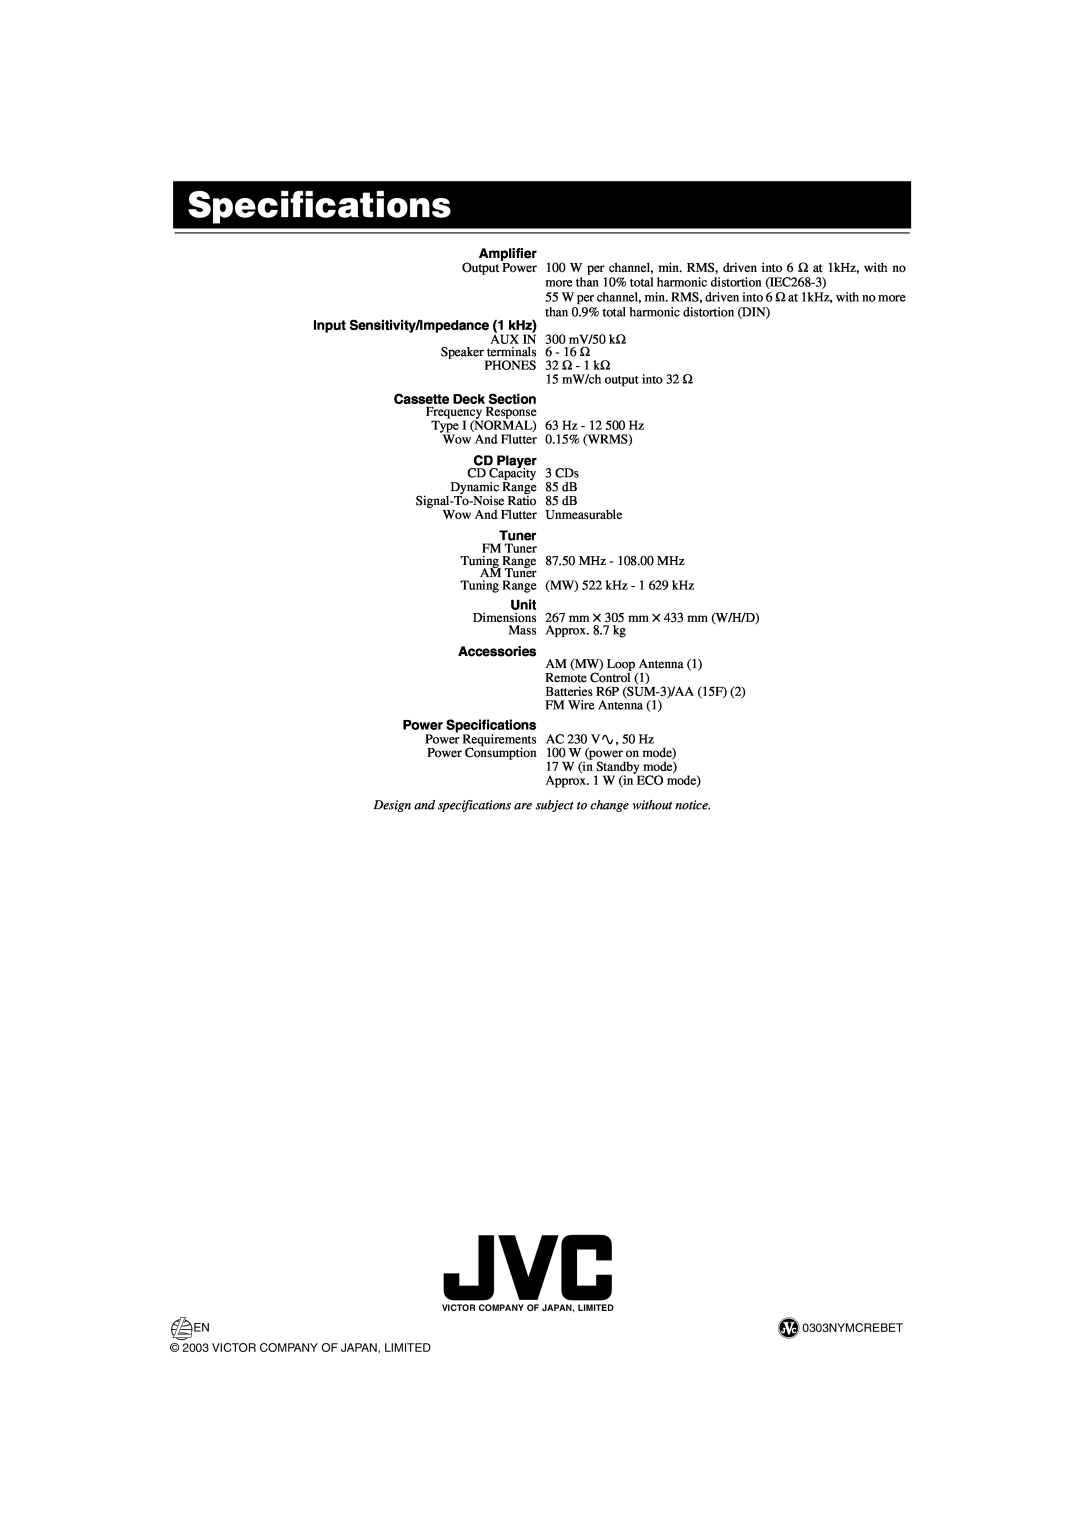 JVC LVT1014-003A Specifications, Amplifier, Input Sensitivity/Impedance 1 kHz, Cassette Deck Section, CD Player, Tuner 